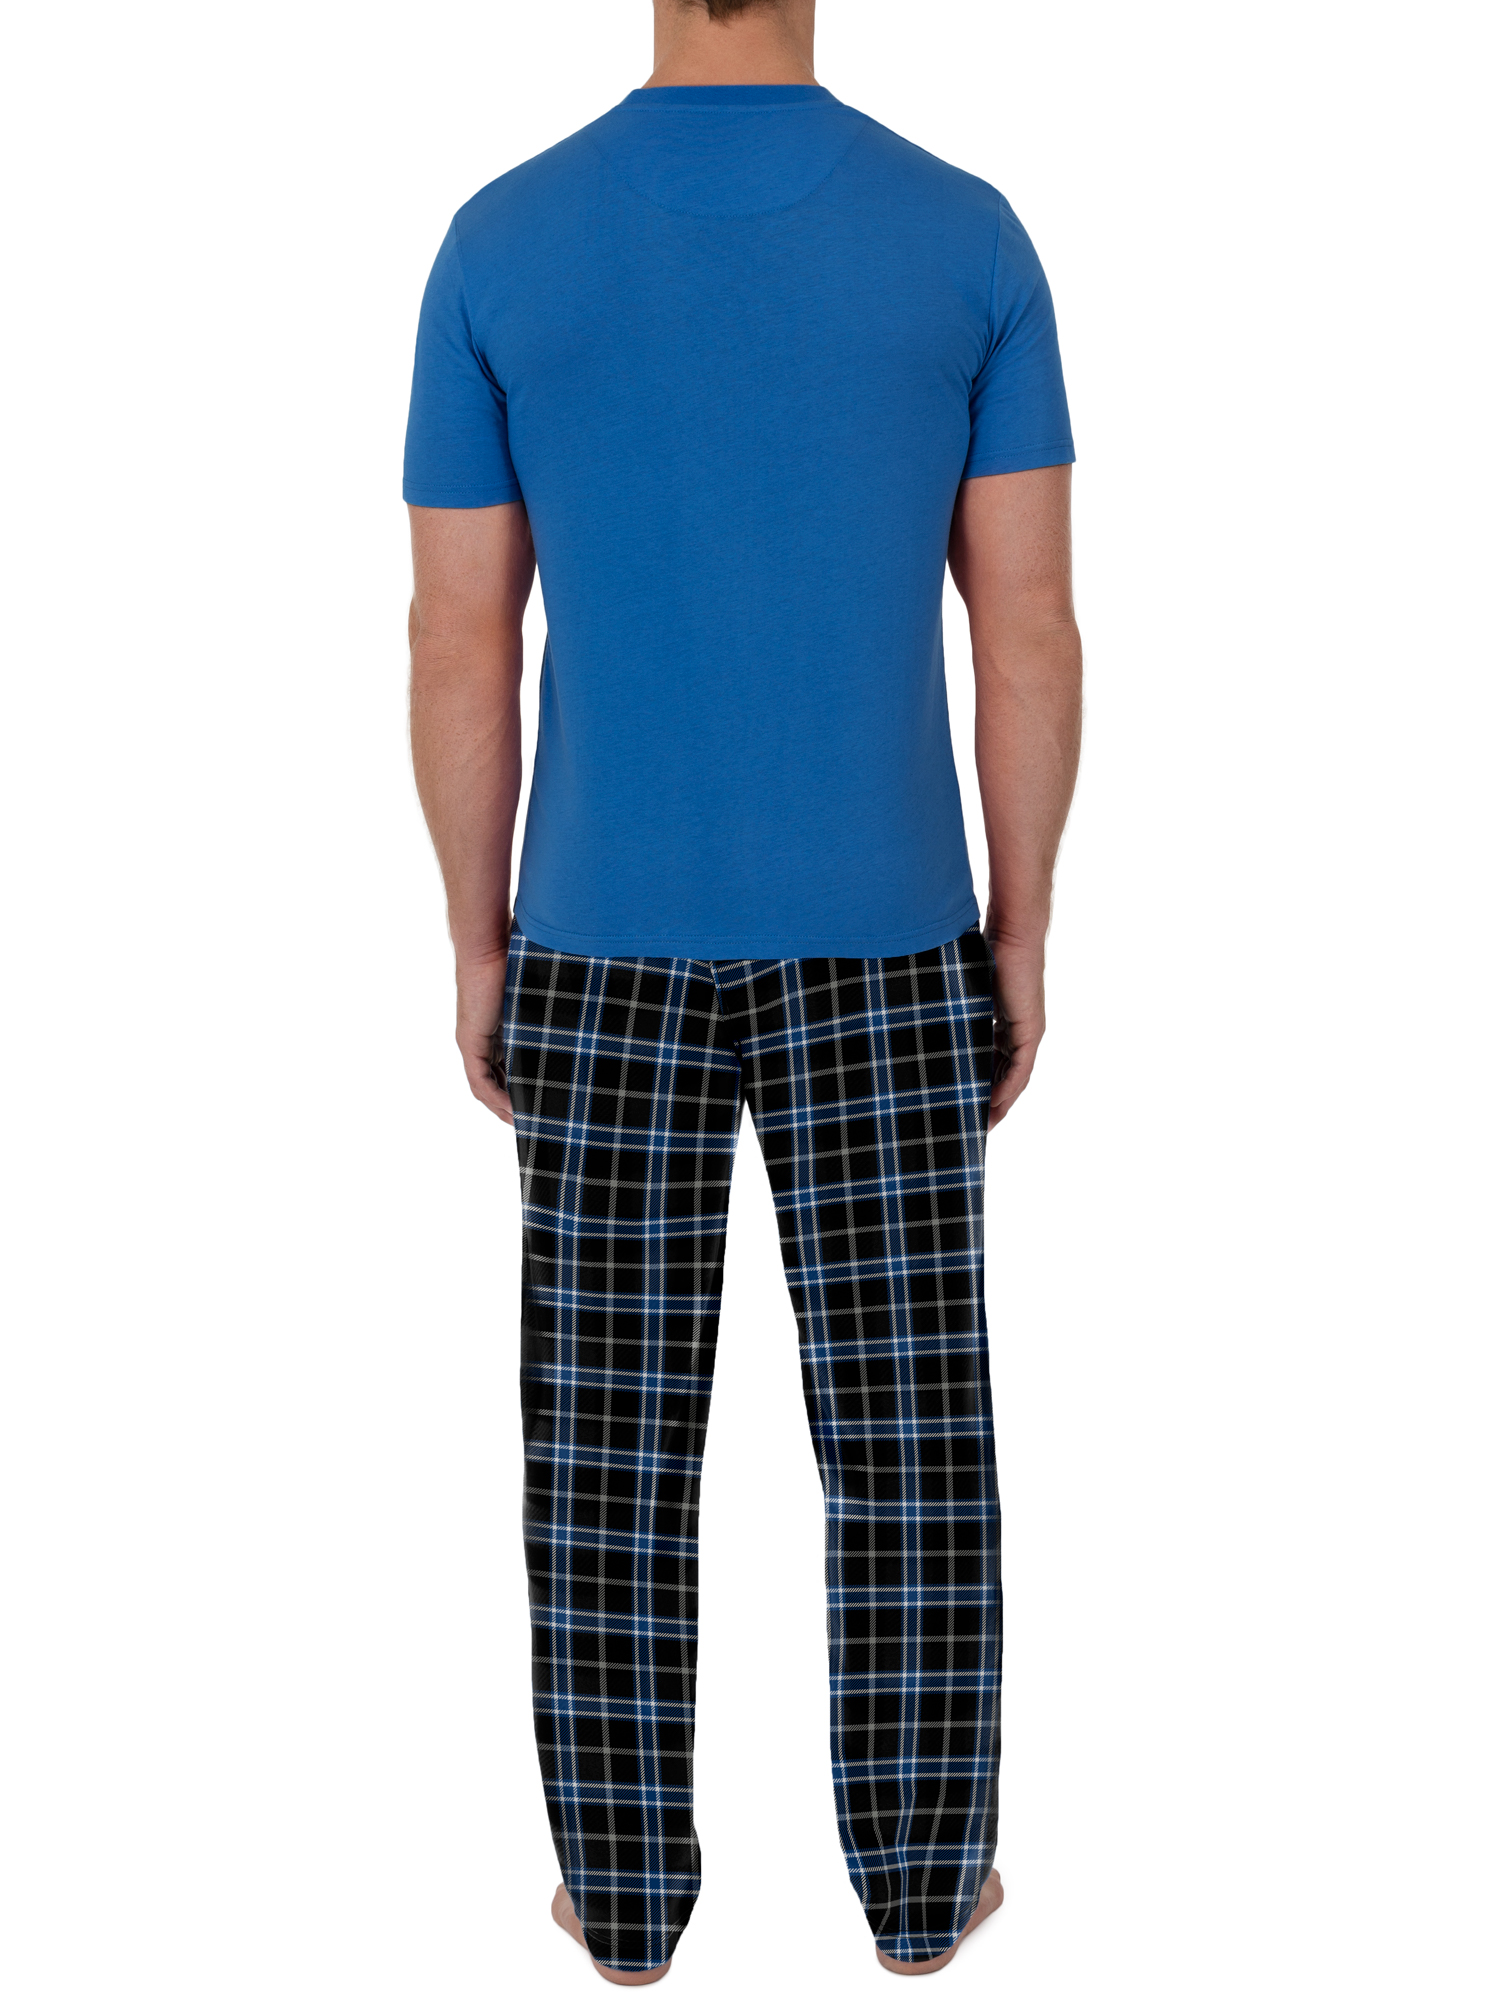 Fruit Of The Loom Men's Short Sleeve Crew Neck Top and Fleece Pajama Pant Set - image 5 of 5